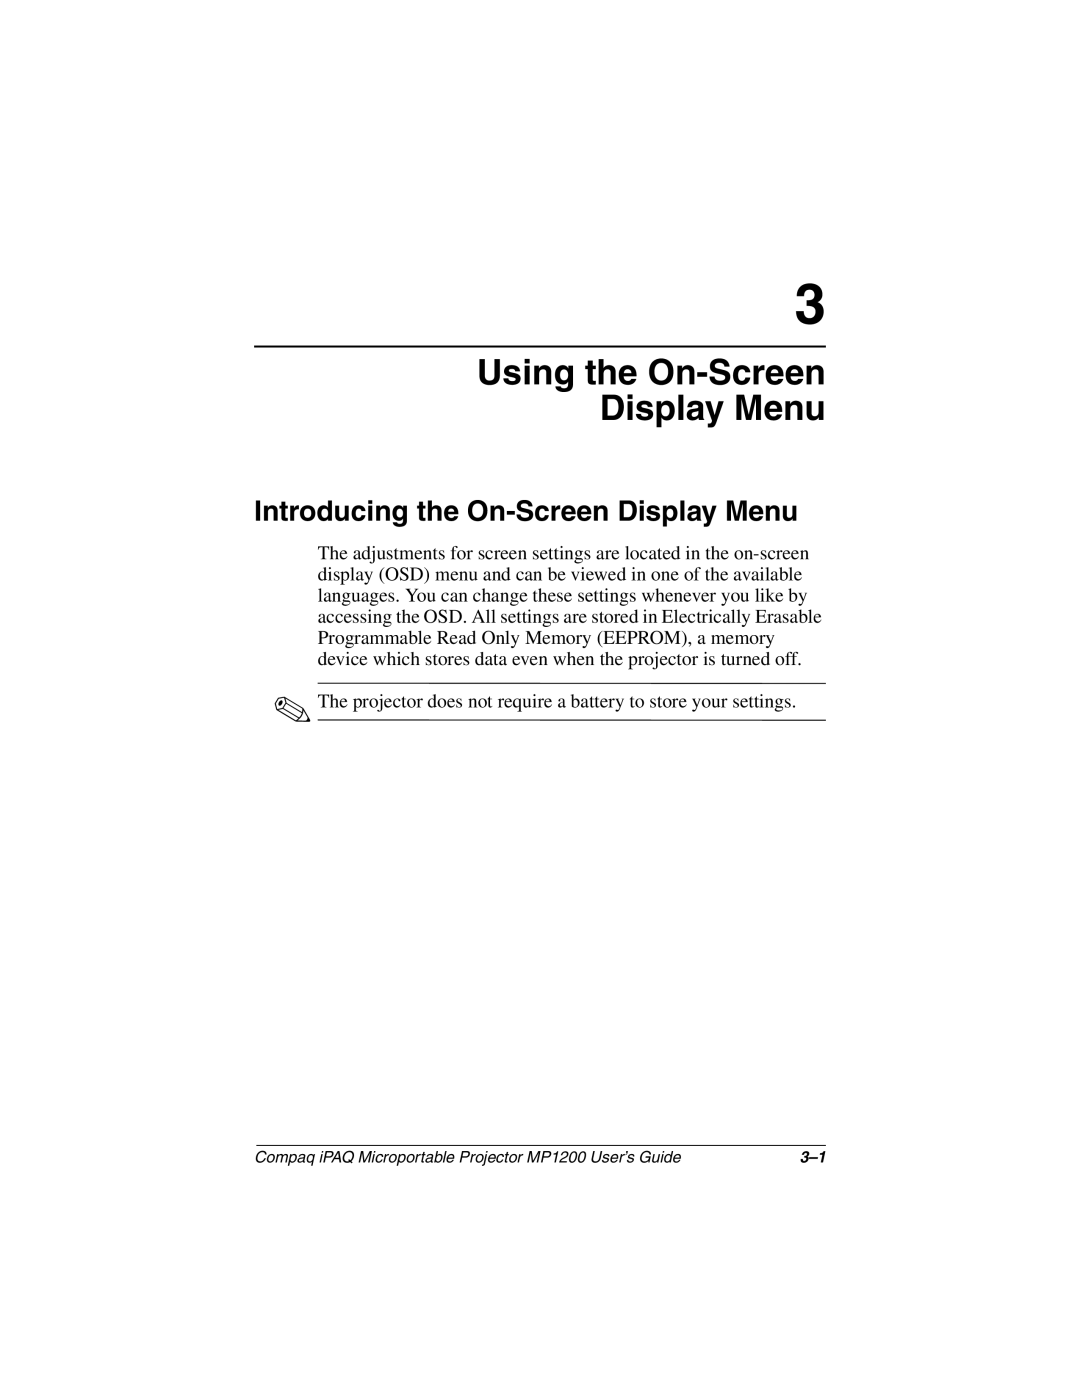 Compaq MP1200 manual Using the On-Screen Display Menu, Introducing the On-Screen Display Menu 